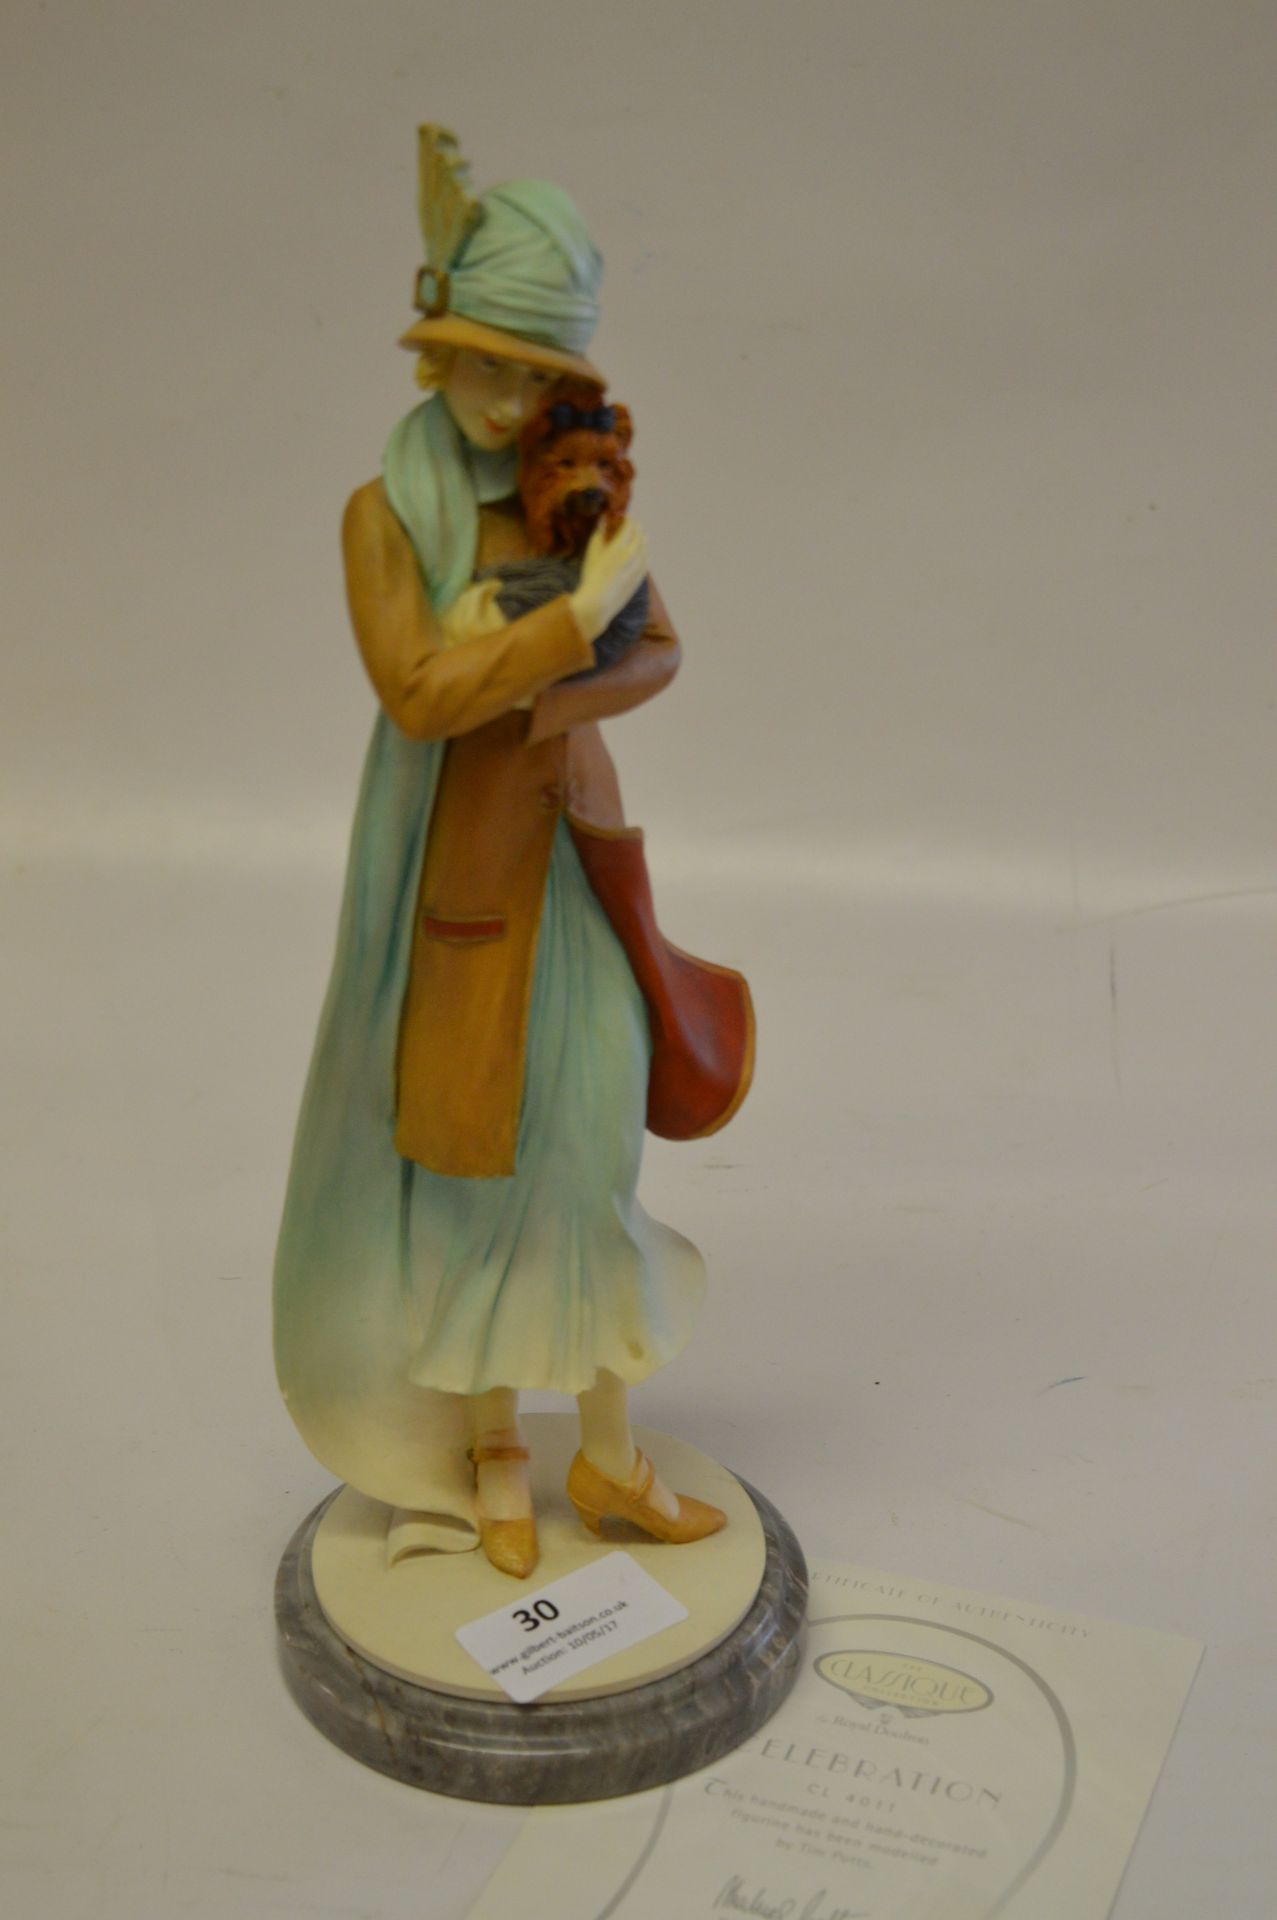 Royal Doulton Figurine "Harriet"